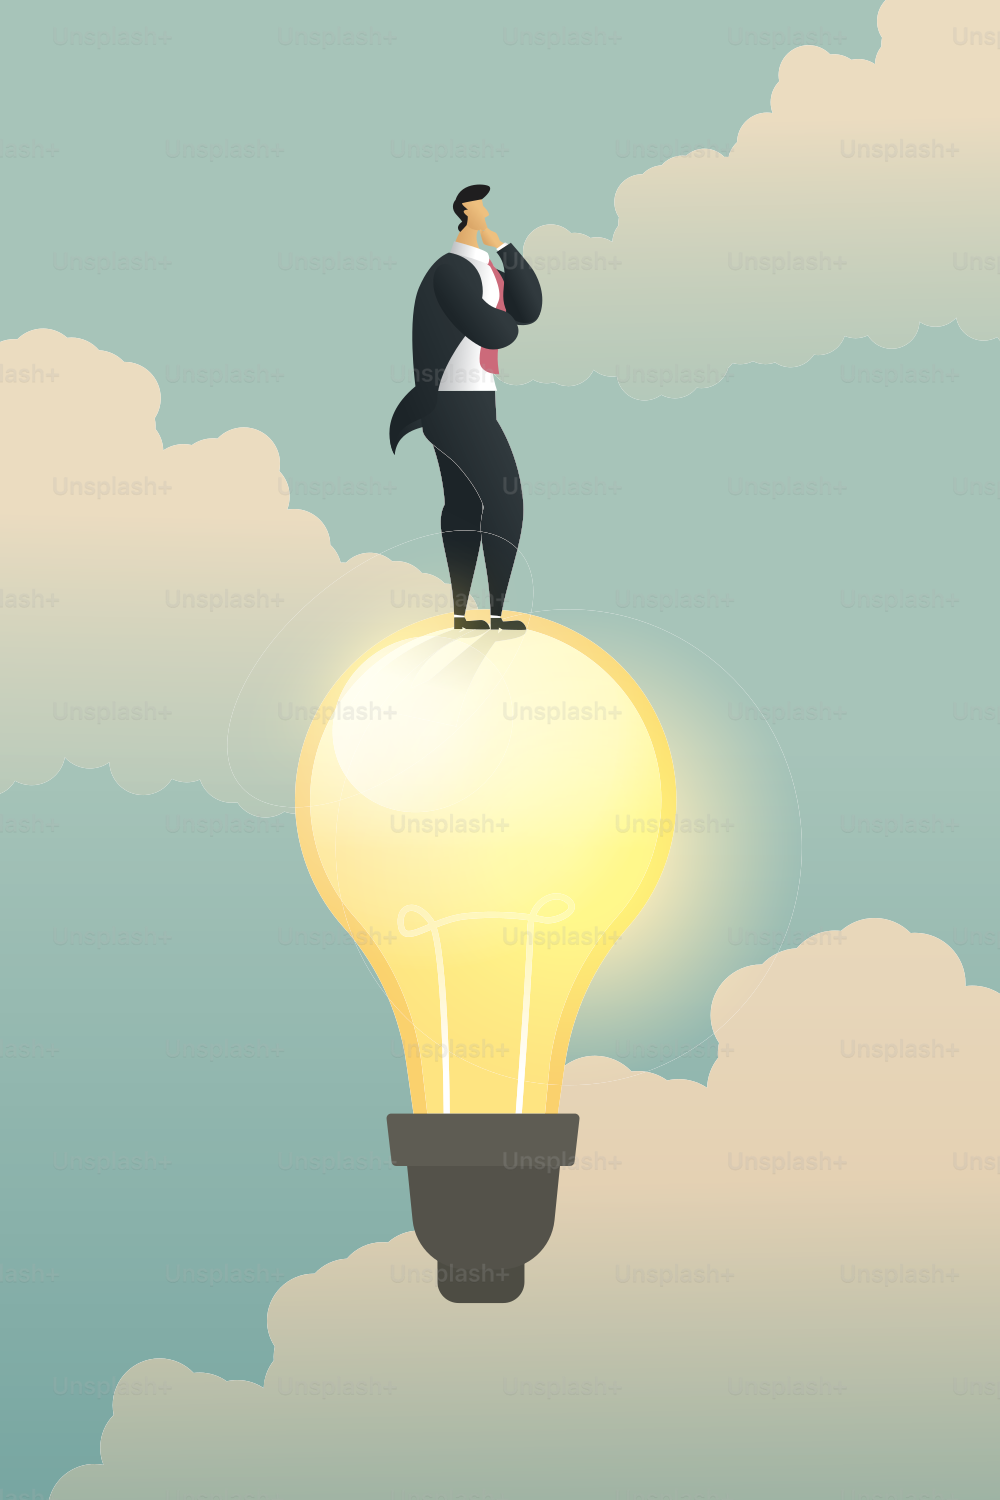 Creativity thinking businessman solution stand on light bulb. illustration vector